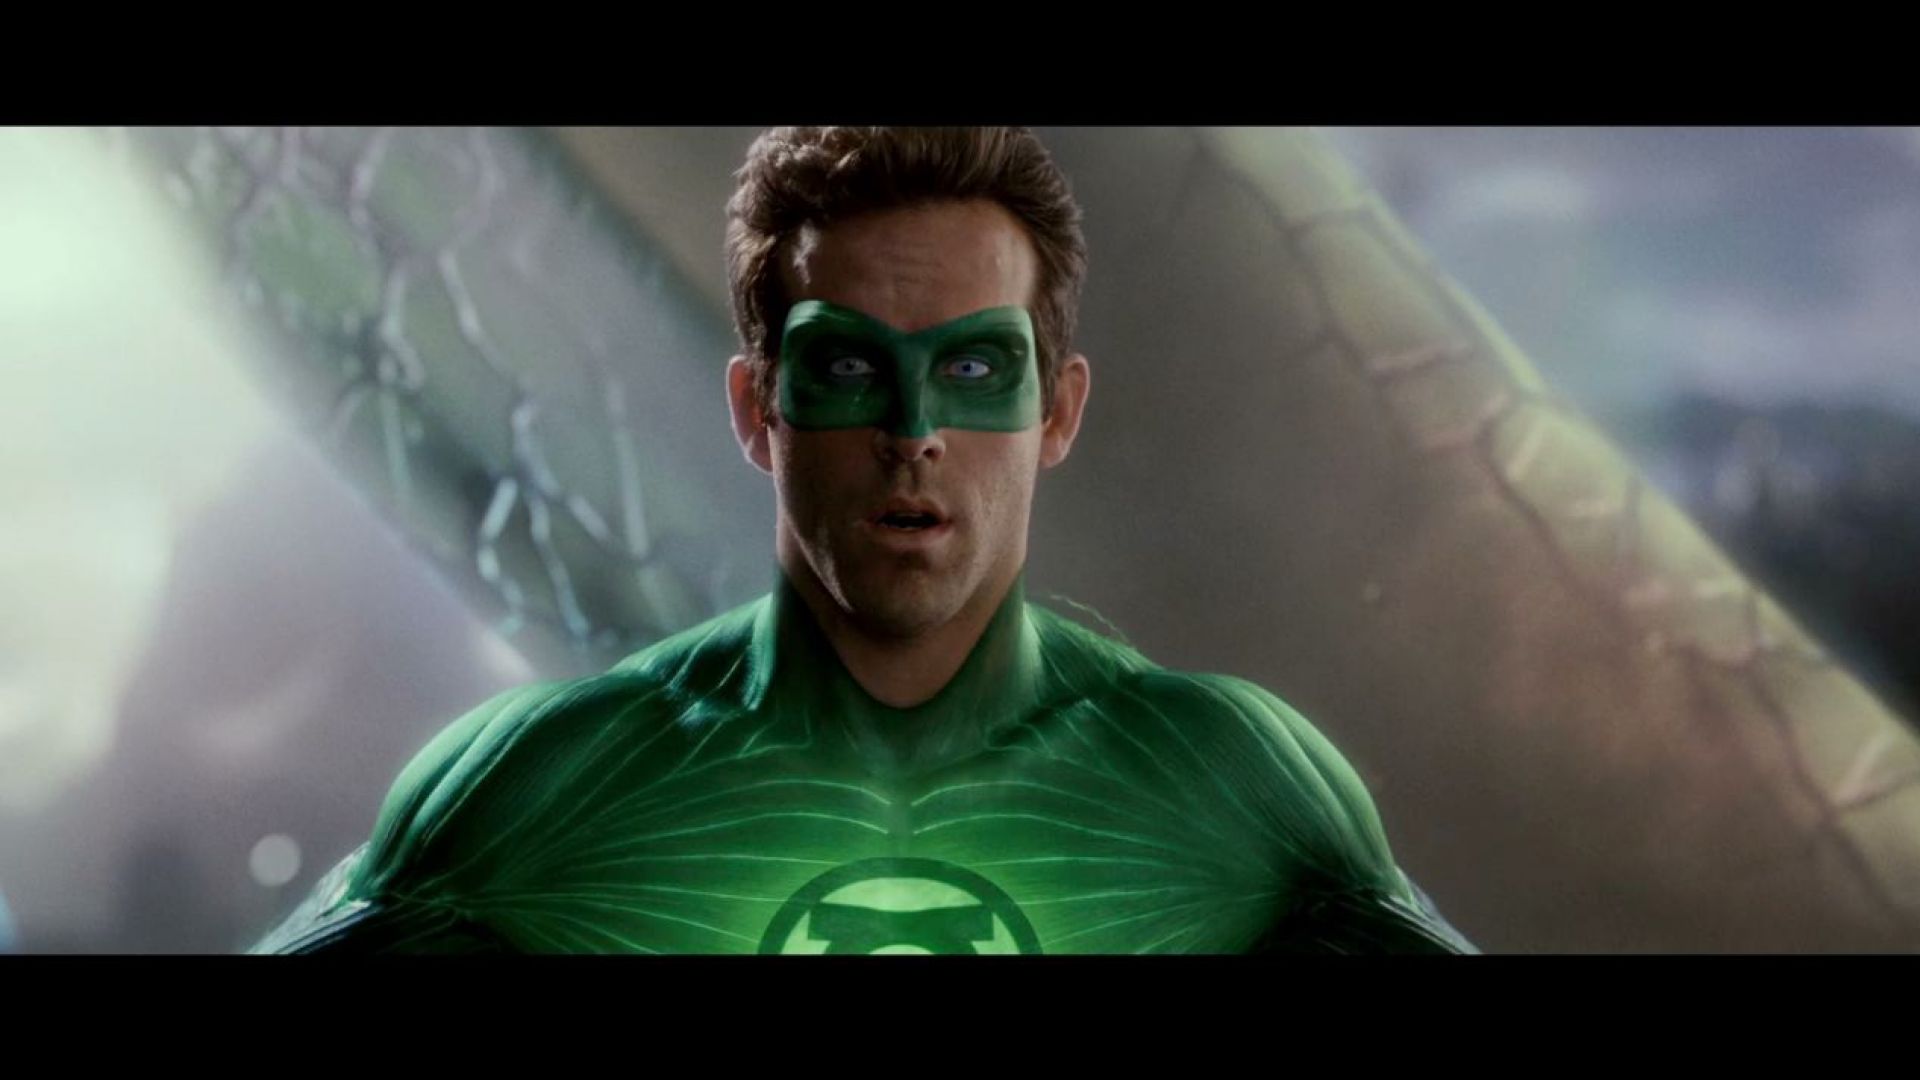 Abin Sur dies and Hal Jordan gets the ring, Green Lantern